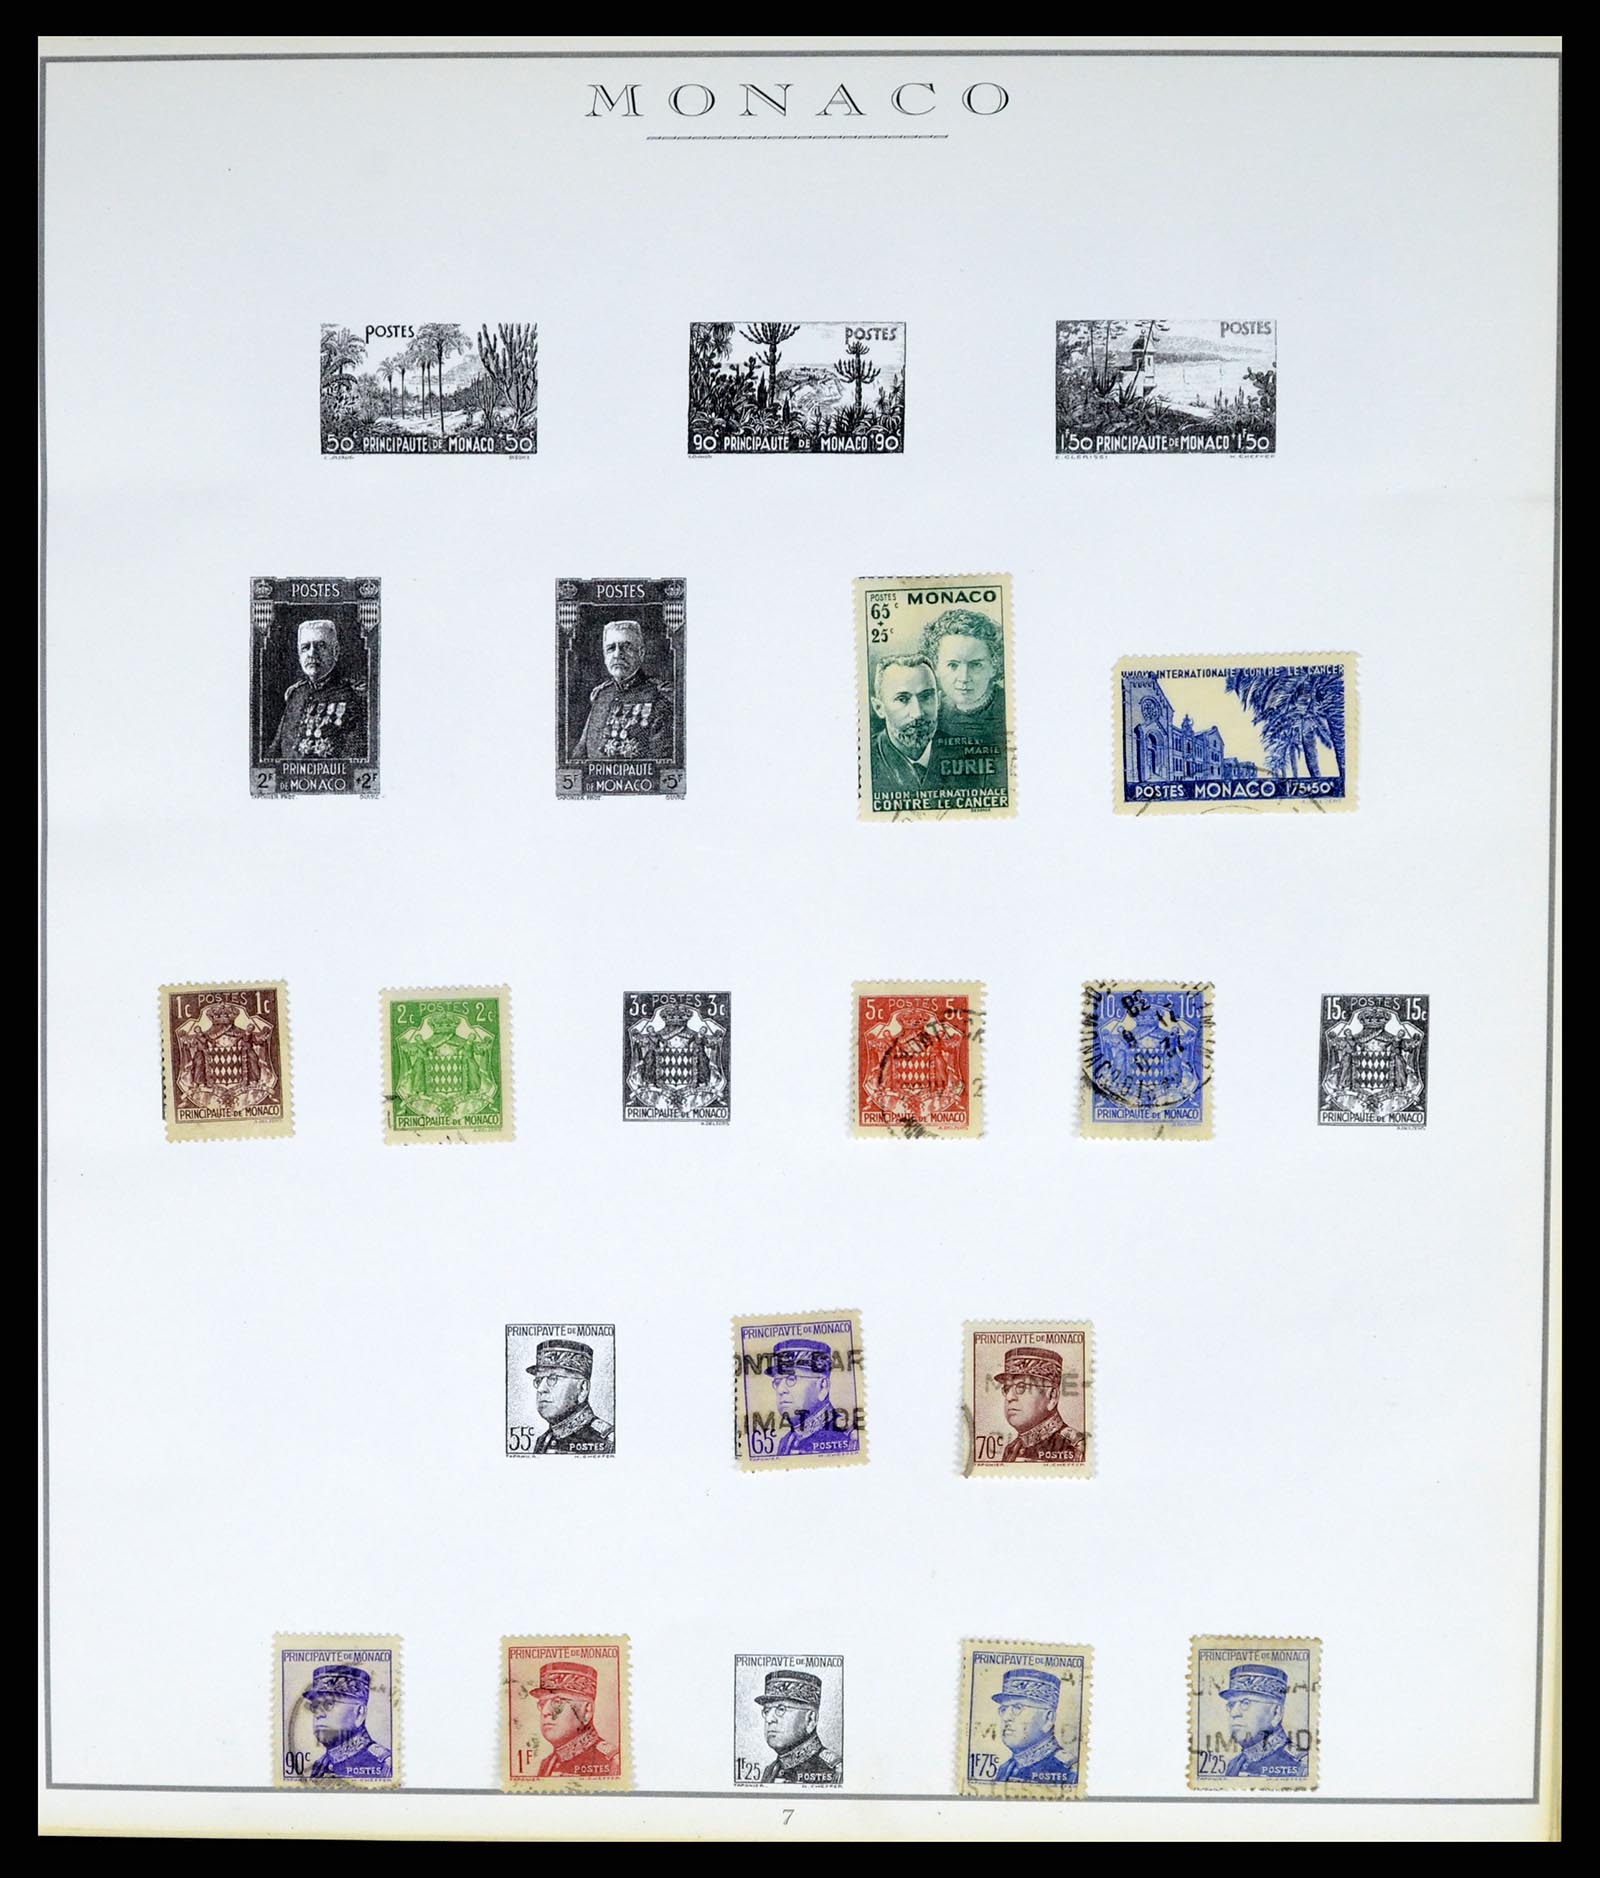 37437 014 - Stamp collection 37437 Monaco 1885-1996.